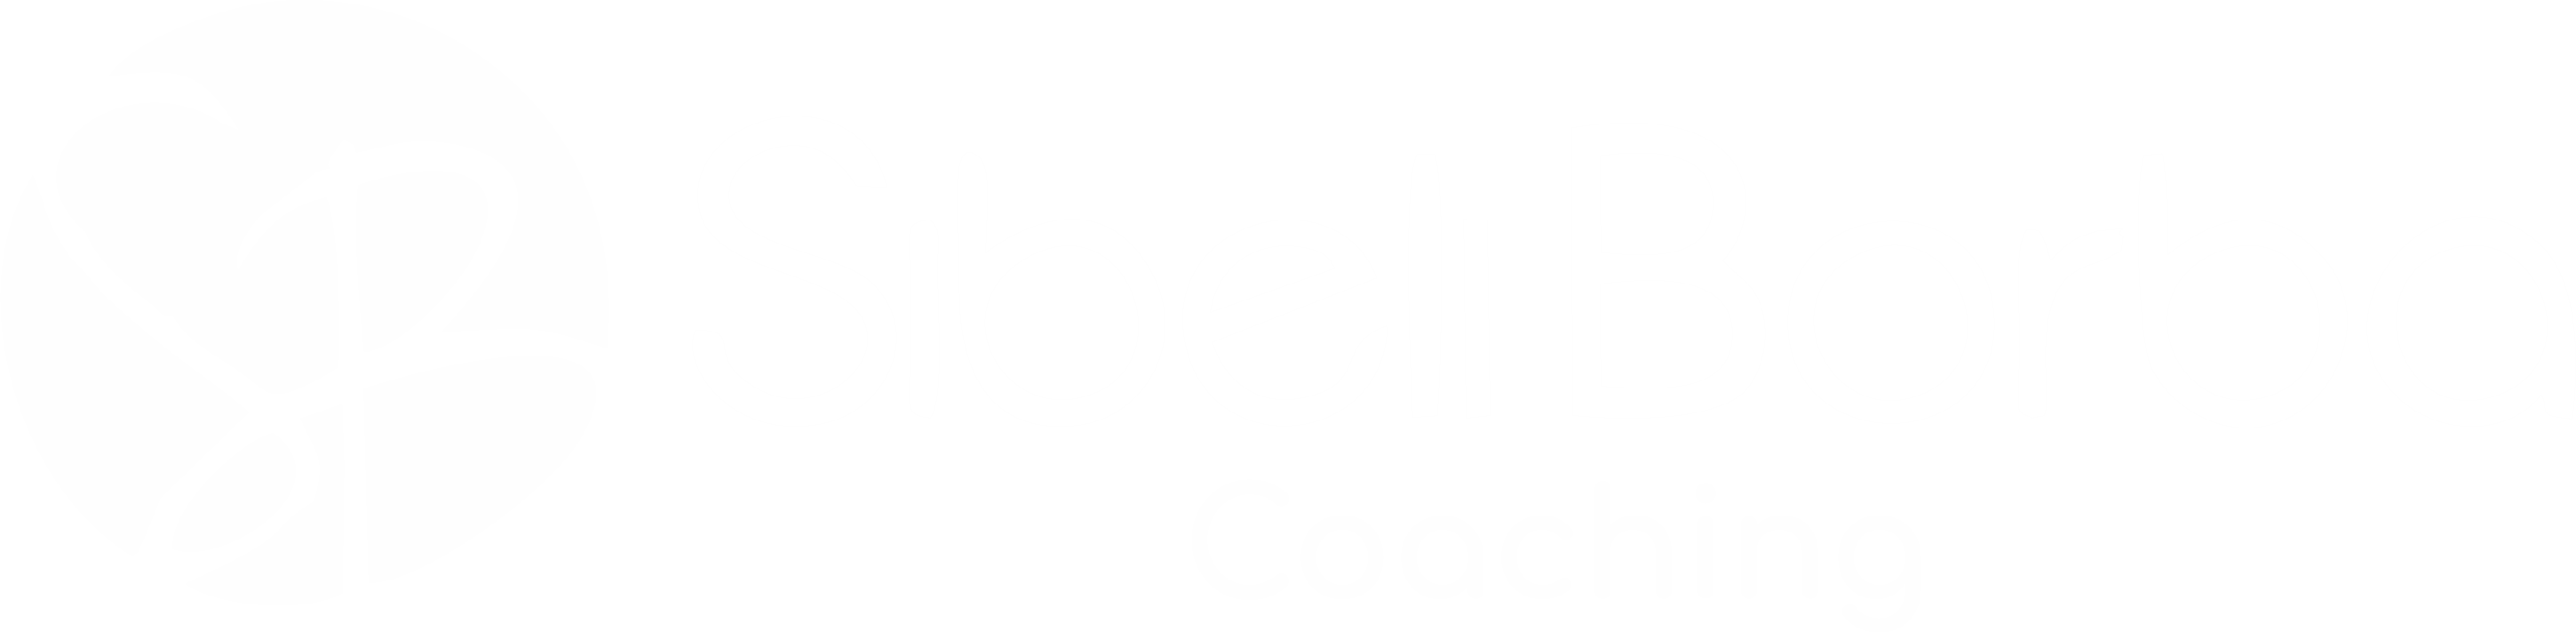 Sibeli Borba Coaching